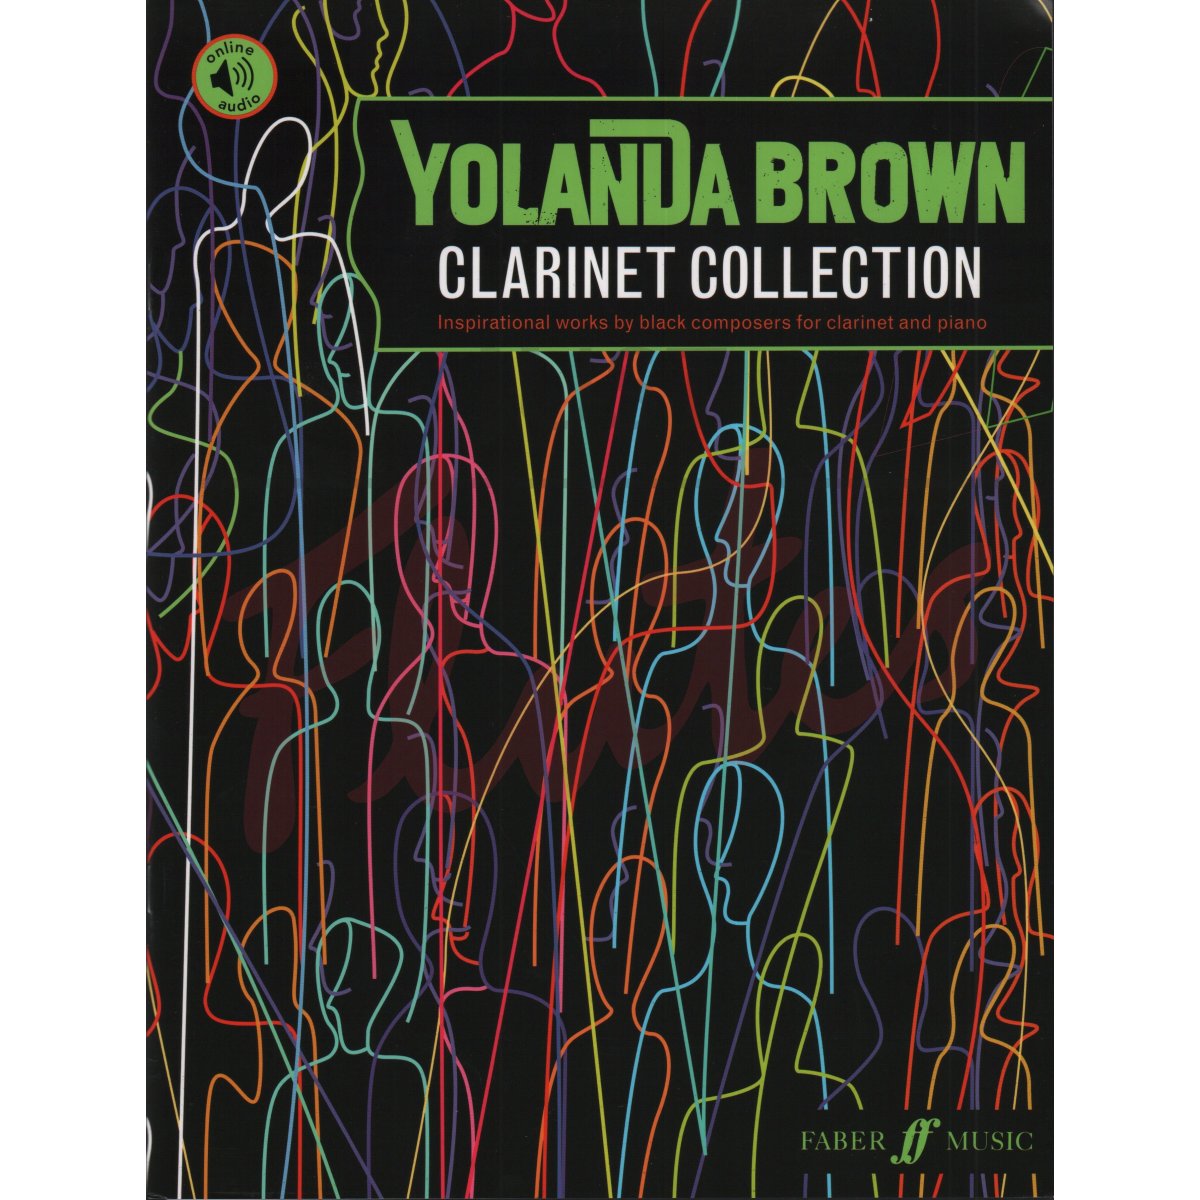 YolanDa Brown’s Clarinet Collection